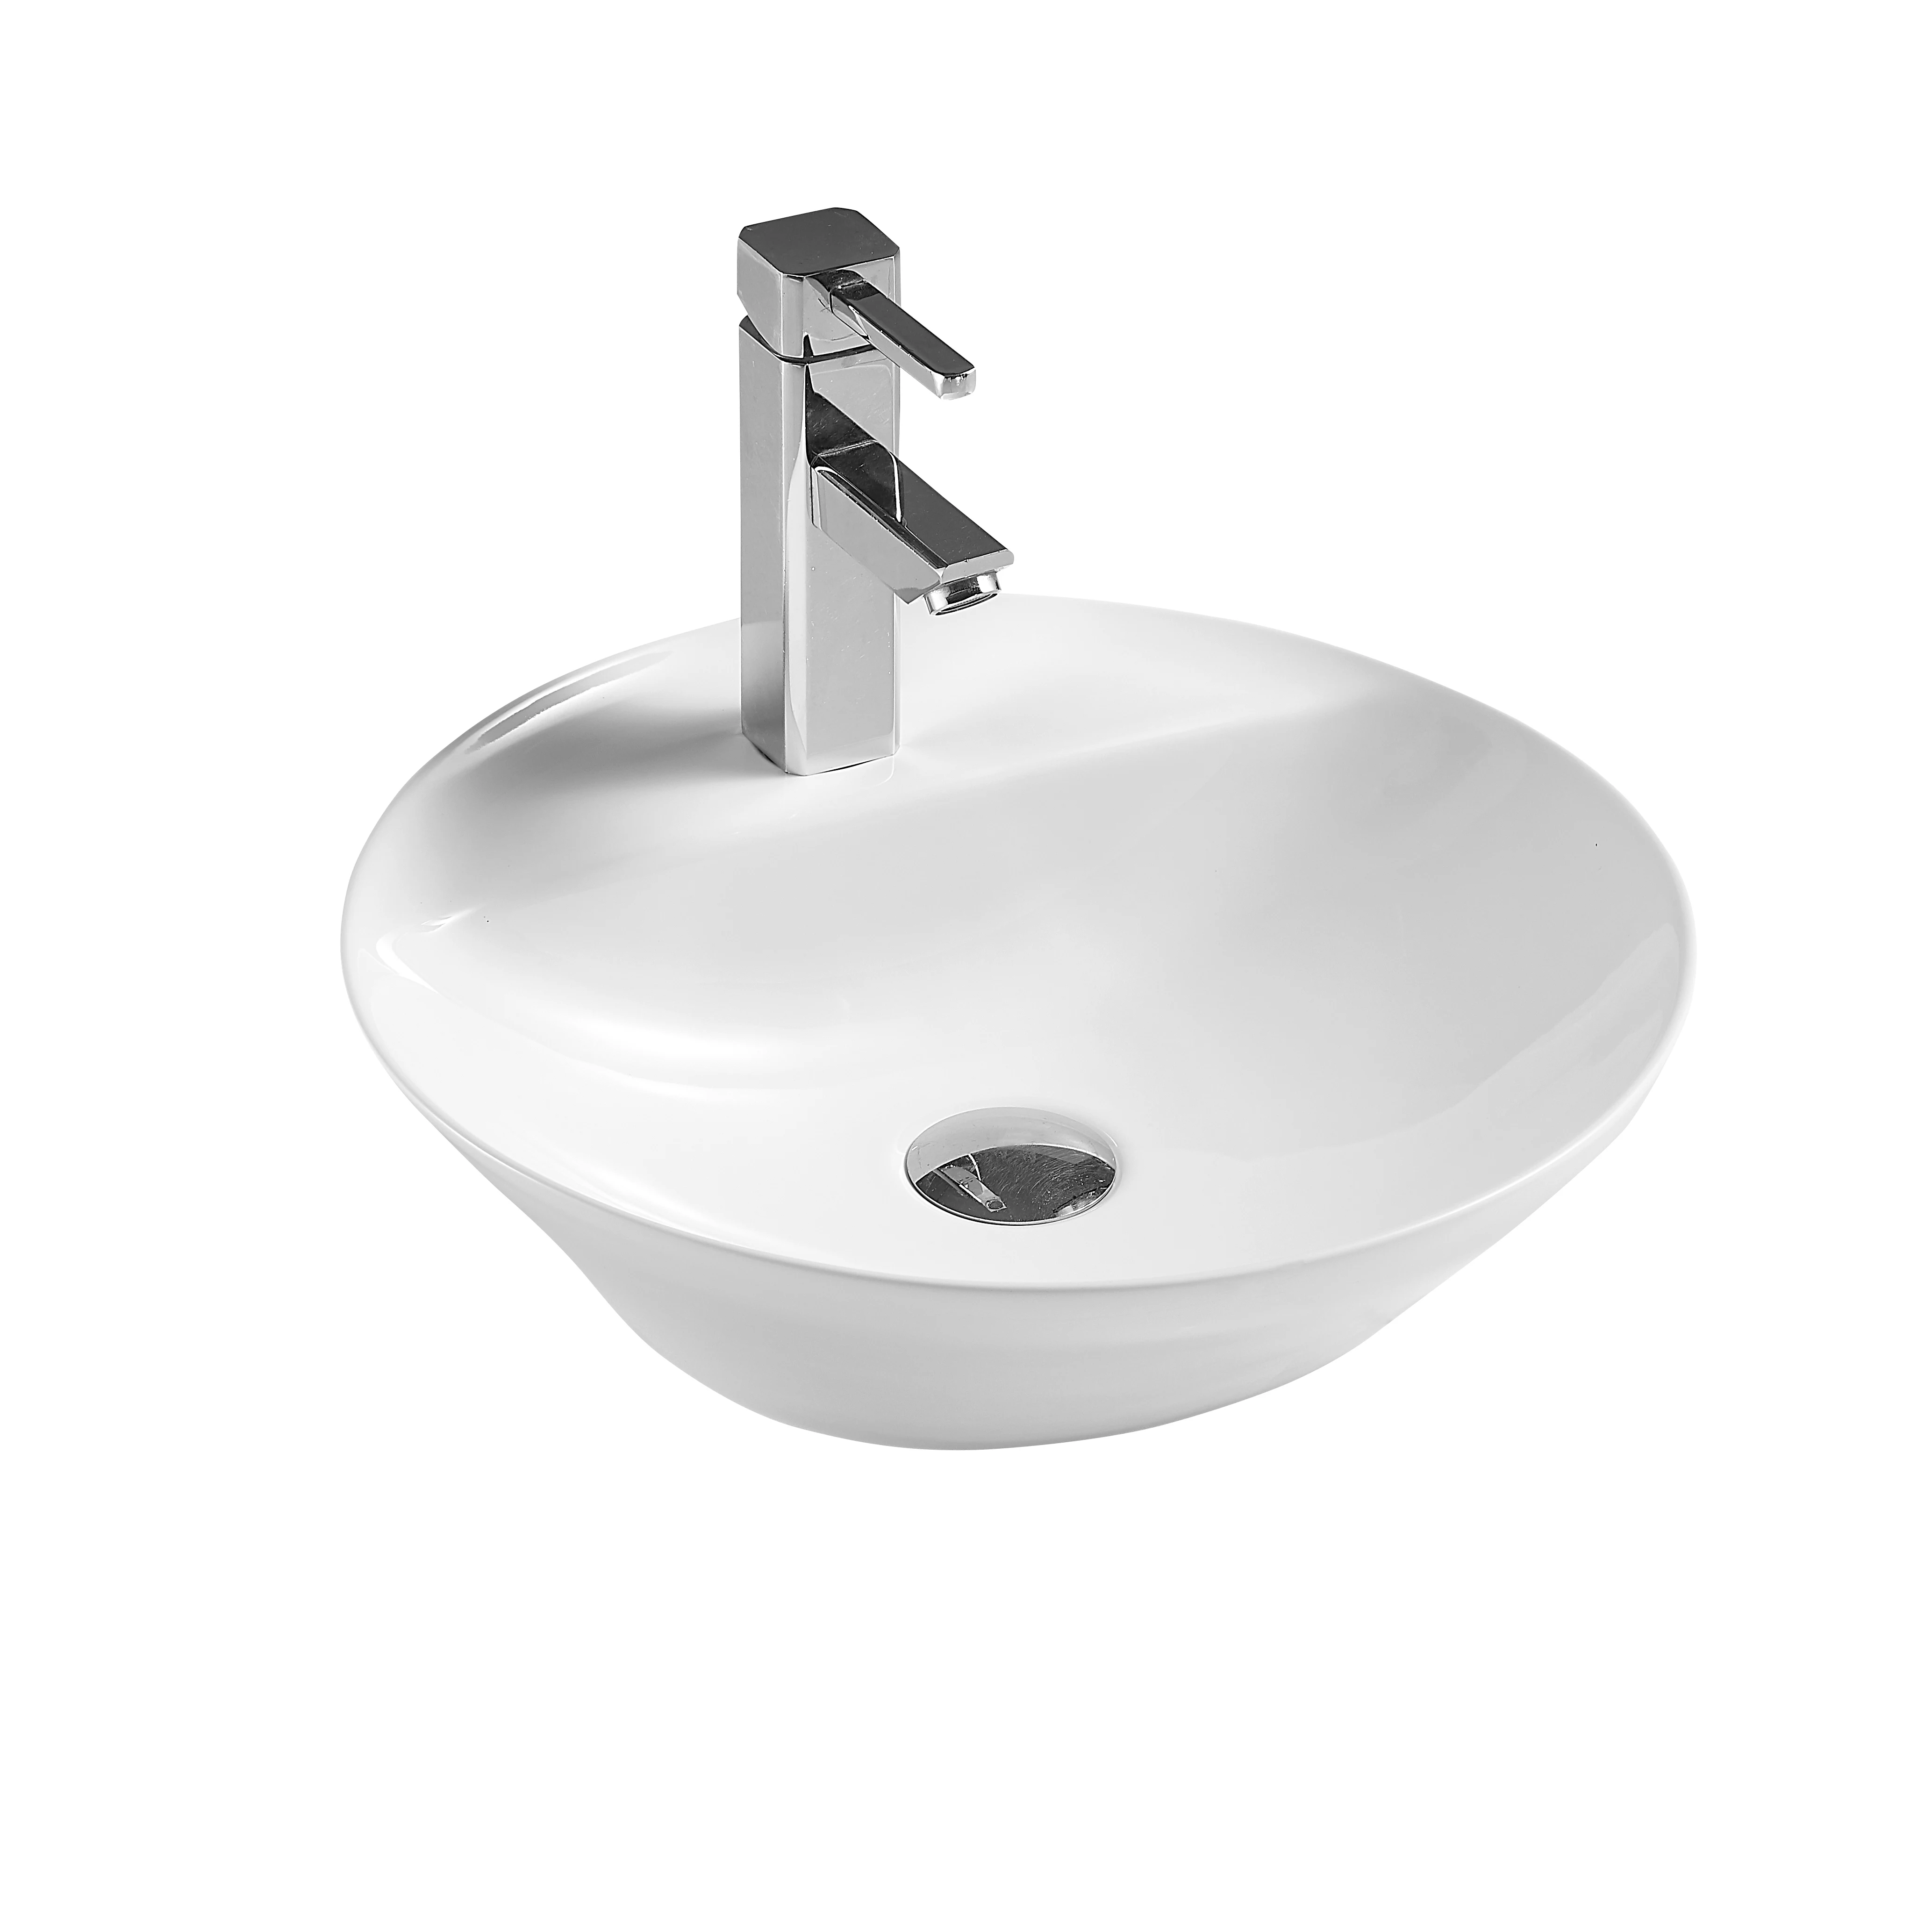 Bathroom Sinks Bathroom Vanity Sinks Wall Hung Ceramic Basin White Square Bathroom Wash Basin Buy Wall Hung Basin